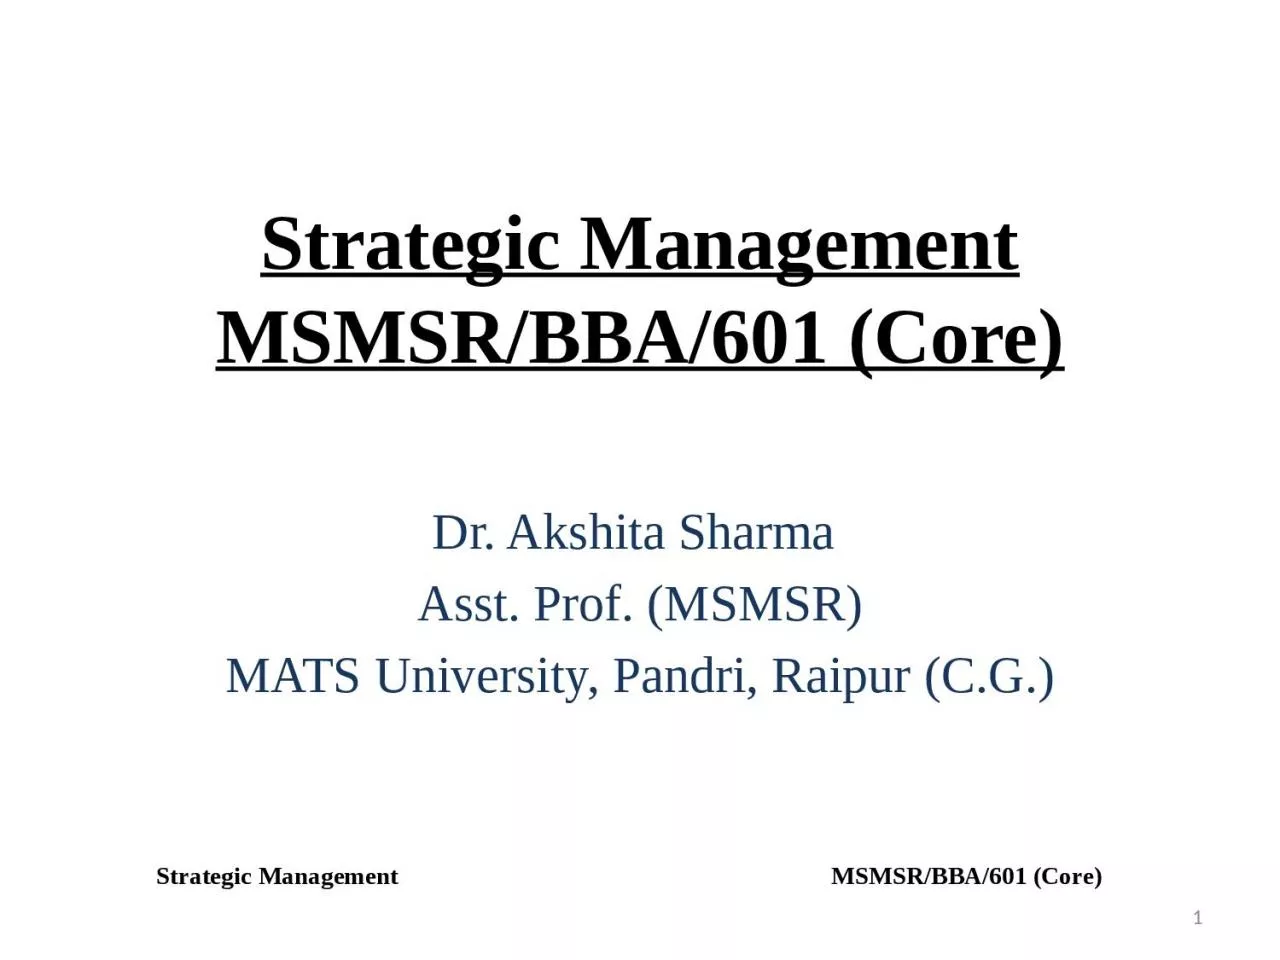 Strategic Management MSMSR/BBA/601 (Core)